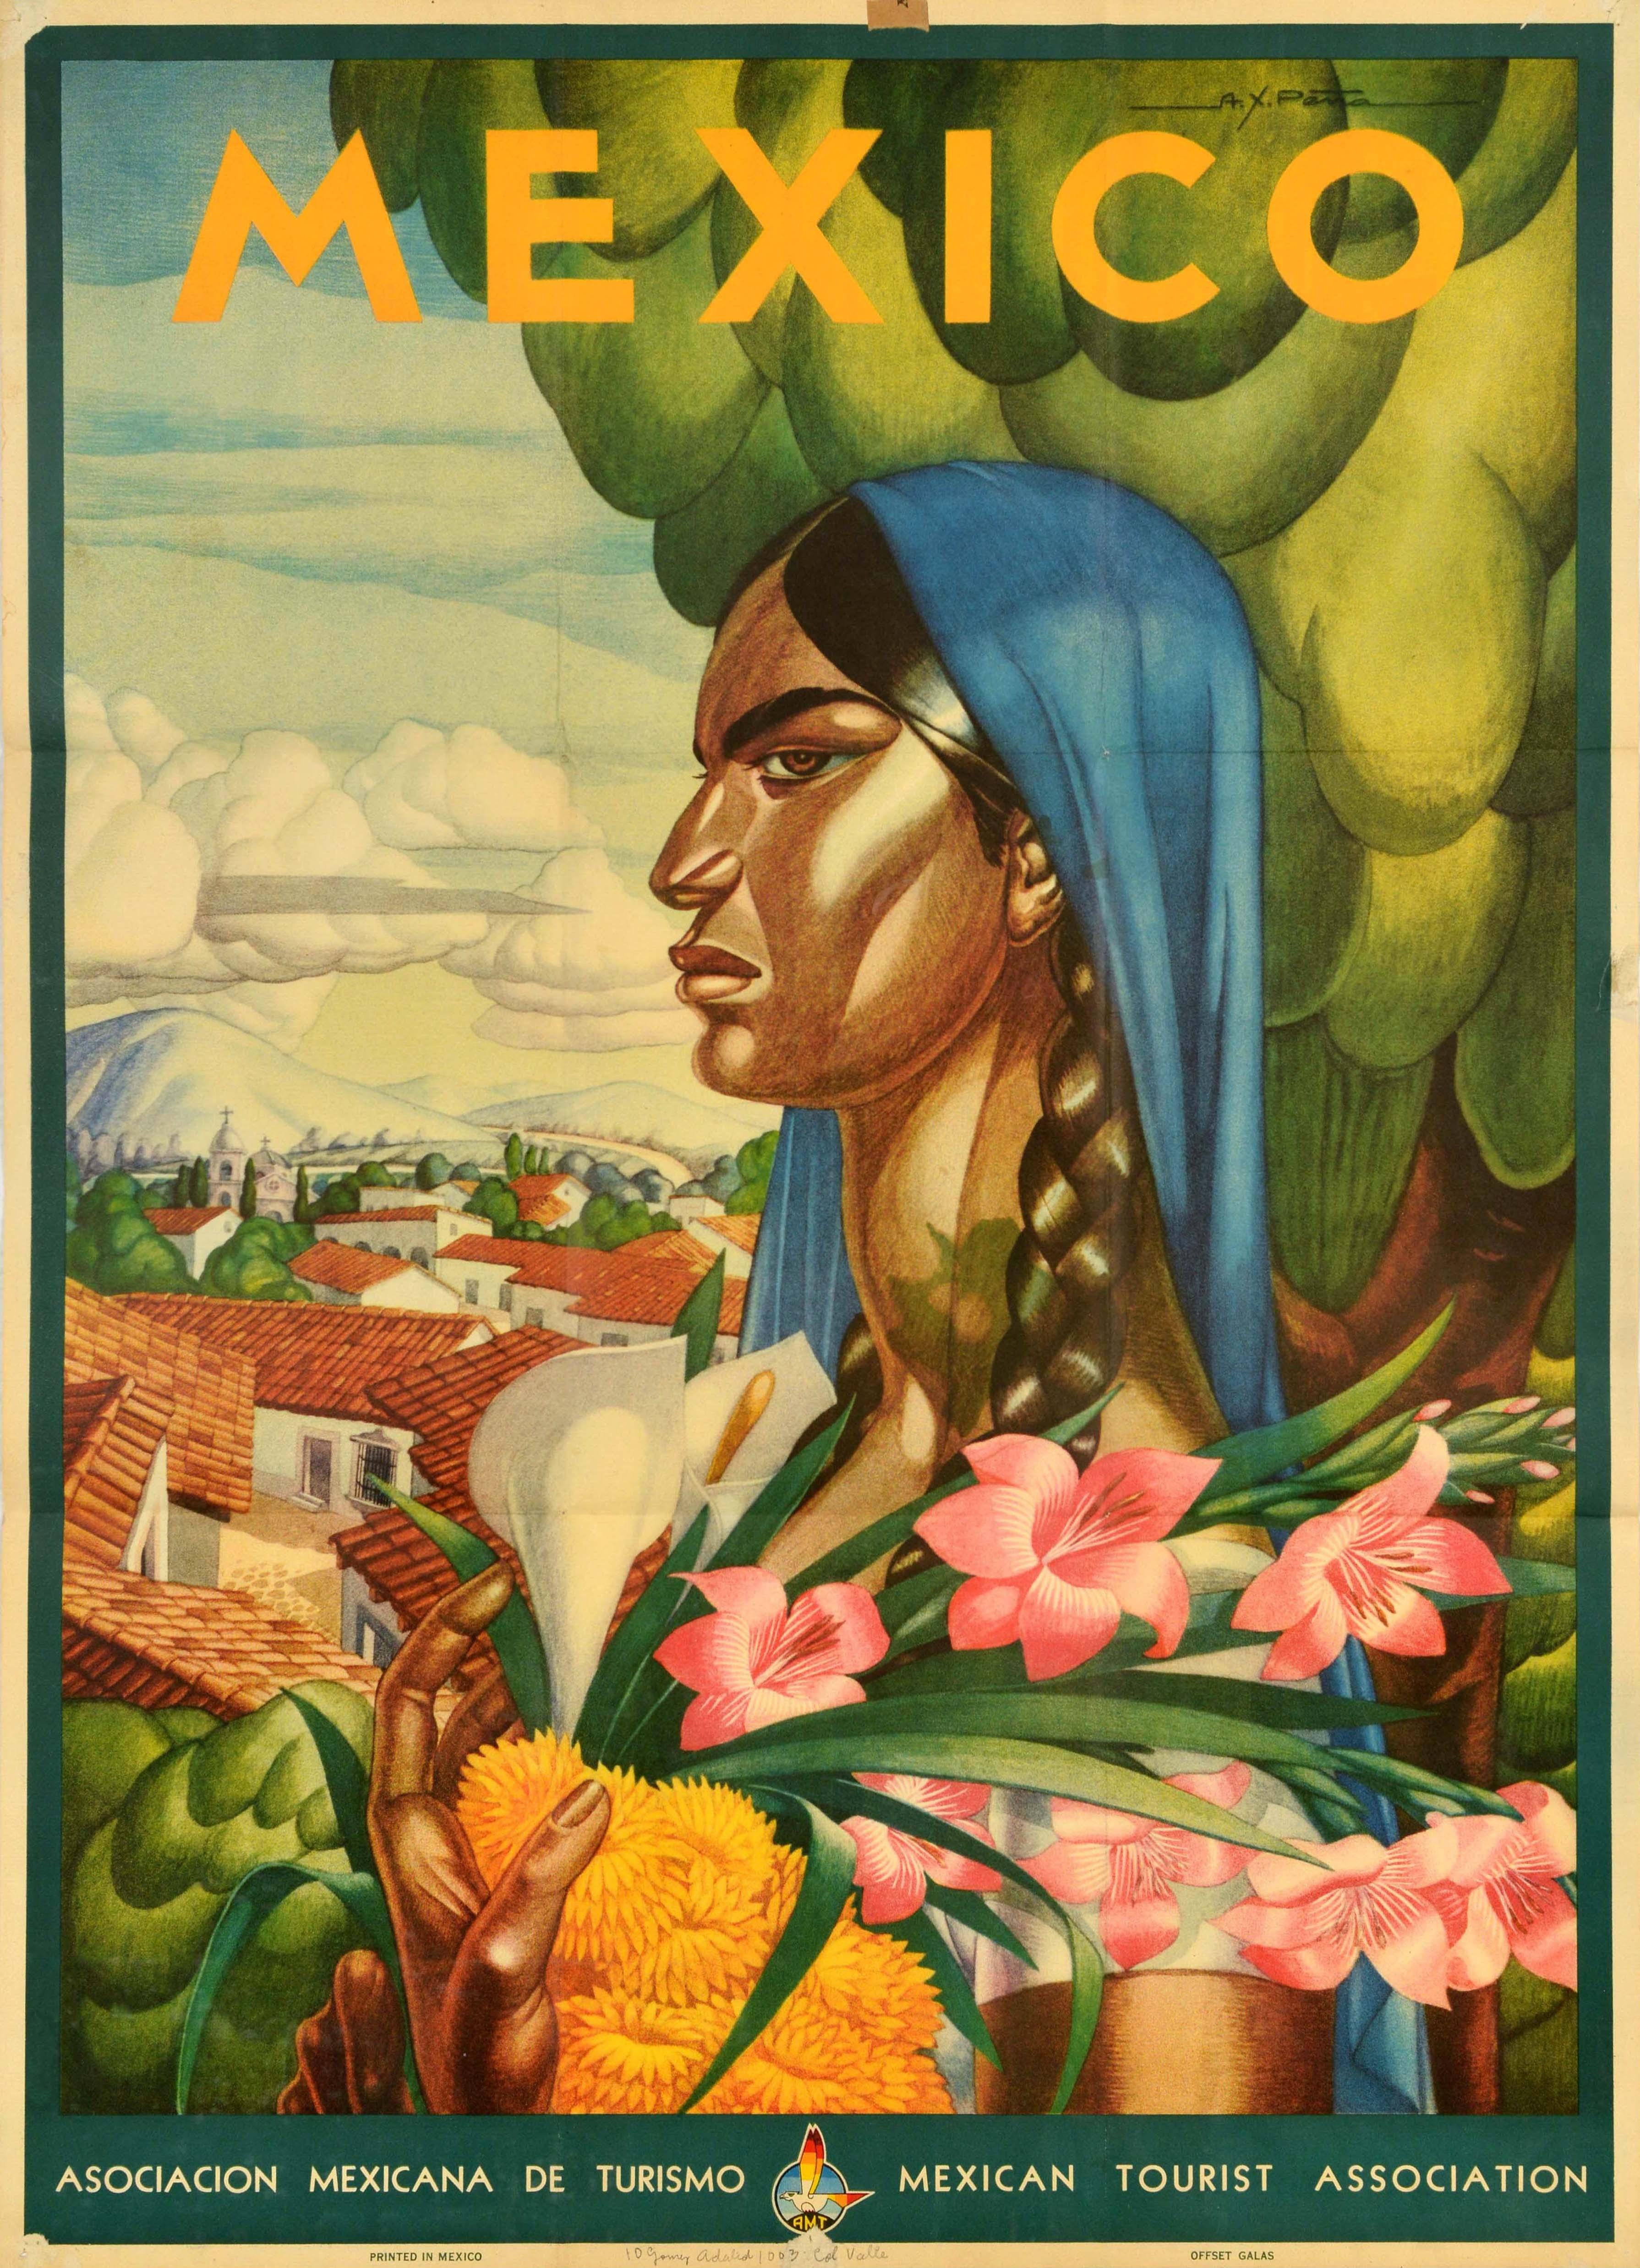 Alfonso X. Pena Print - Original Vintage Travel Poster Mexico Alfonso X Pena Midcentury Art